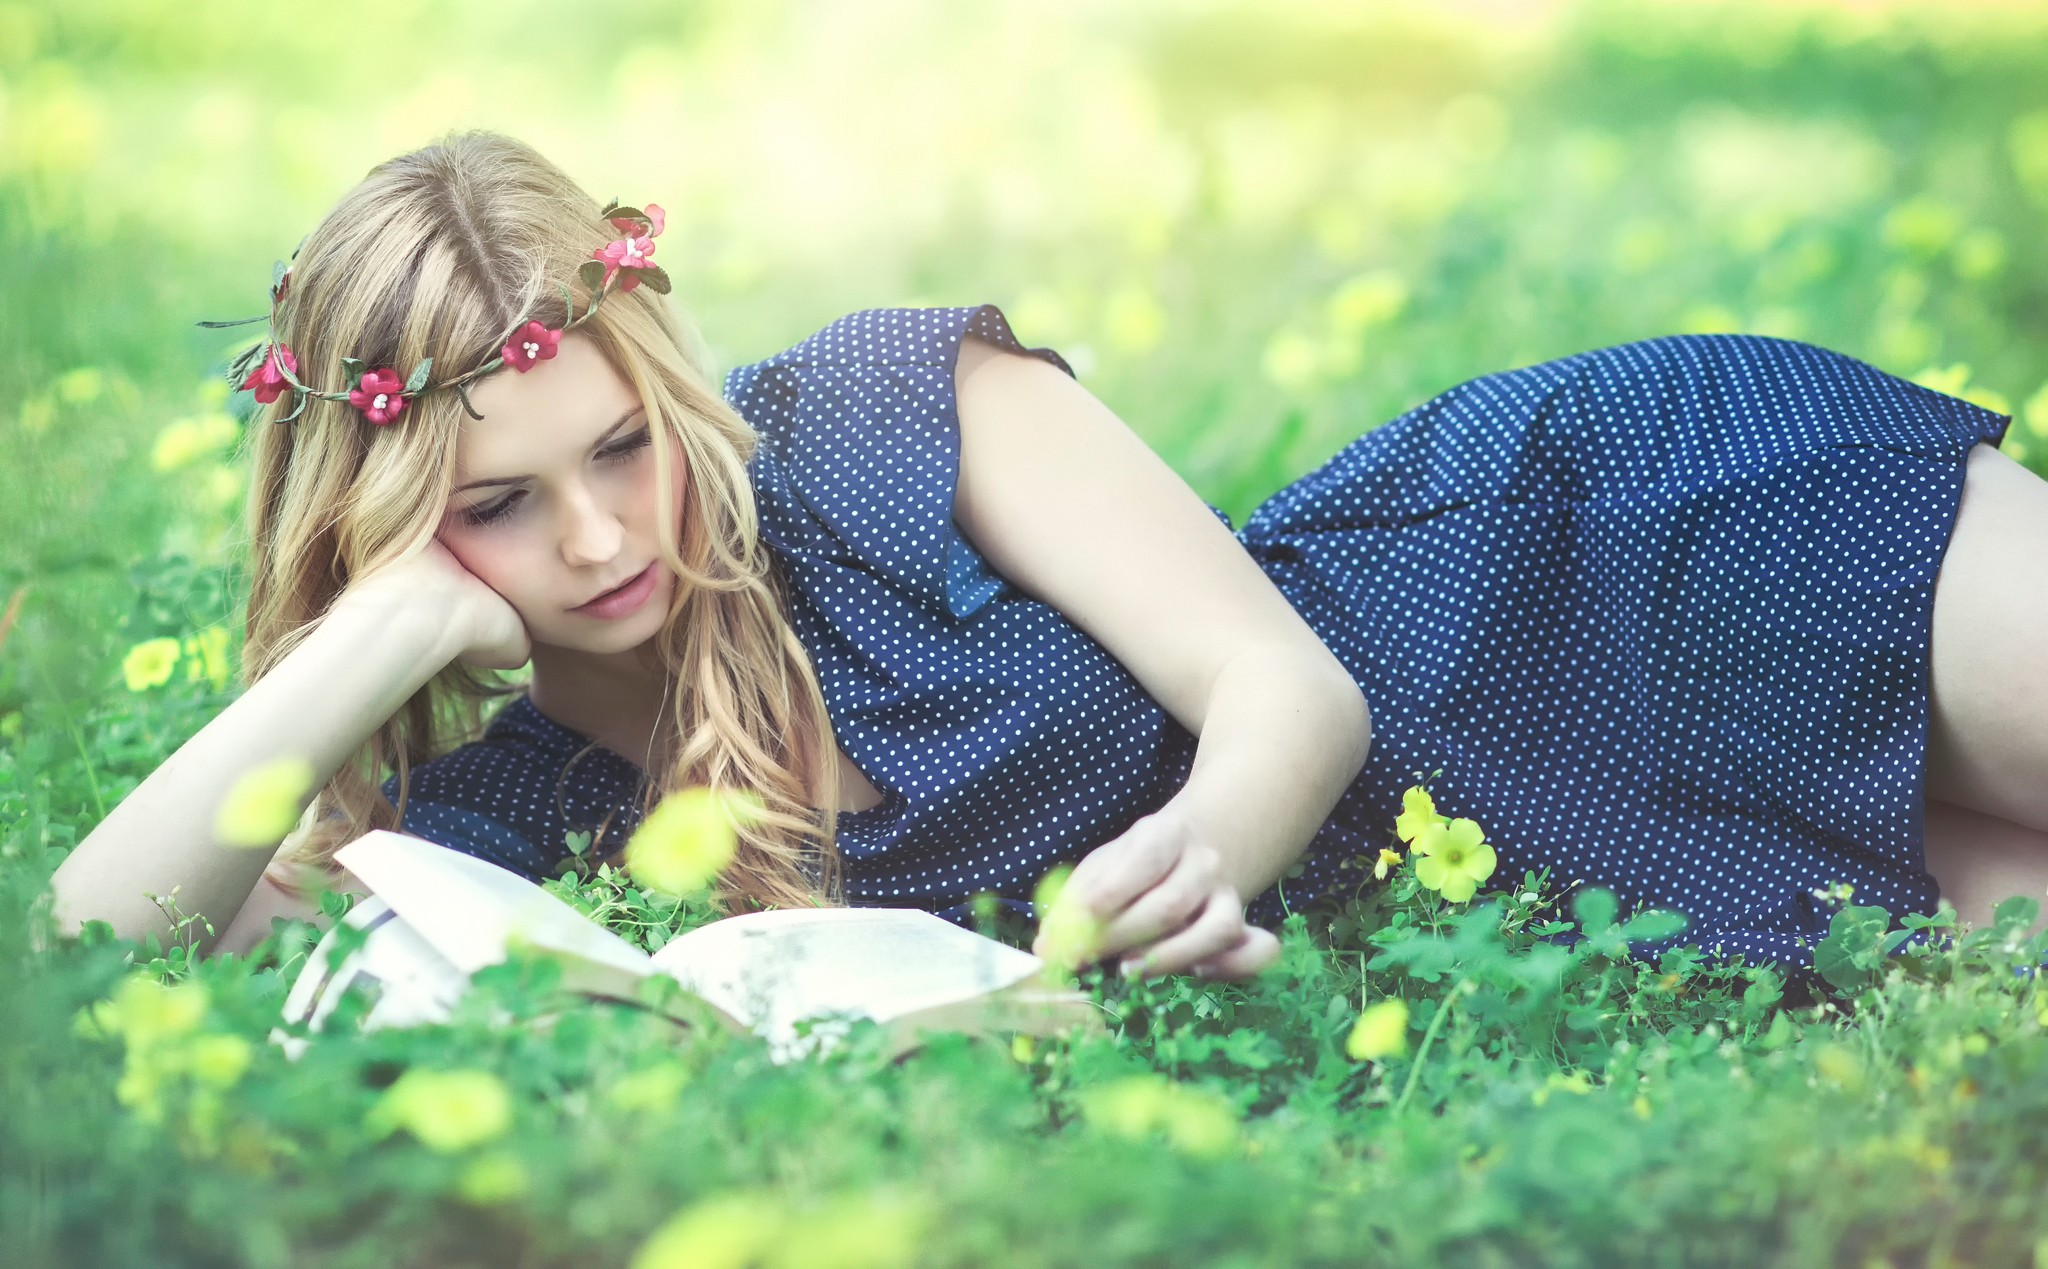 women model long hair women outdoors grass blonde reading flower in hair polka dots blue dress Wallpaper